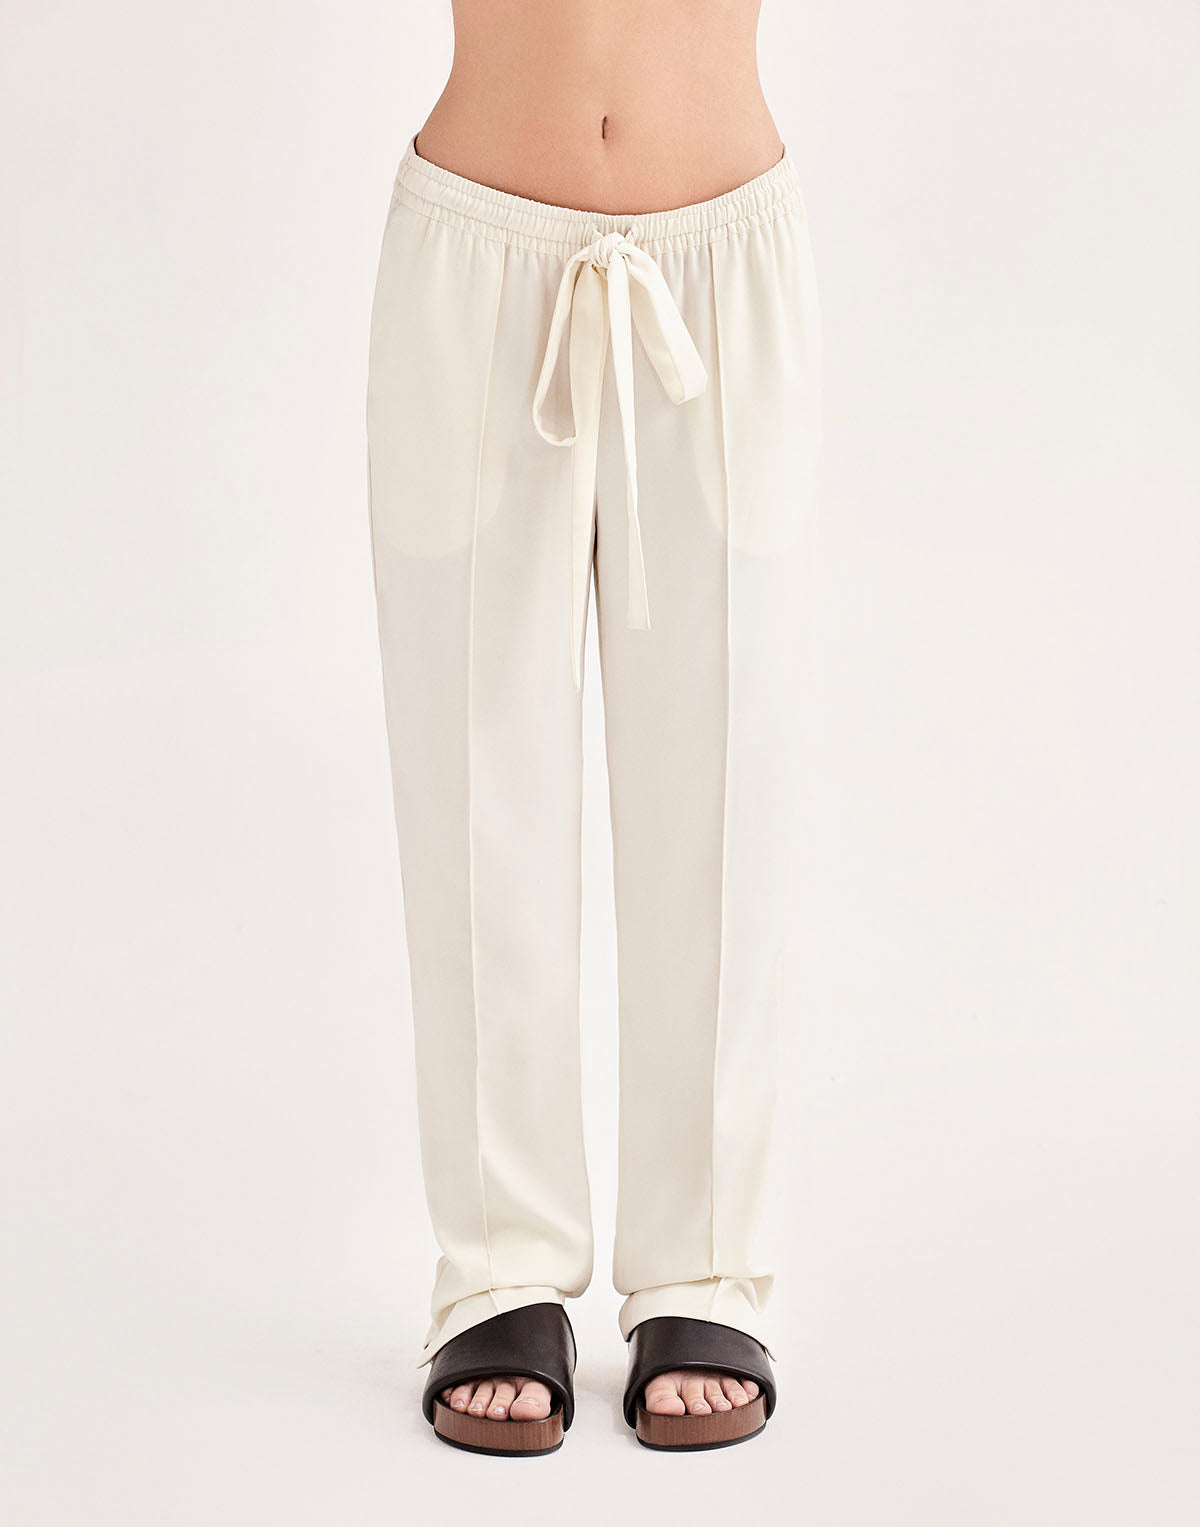 Soft Surroundings Drawstring Pajama Pants for Women